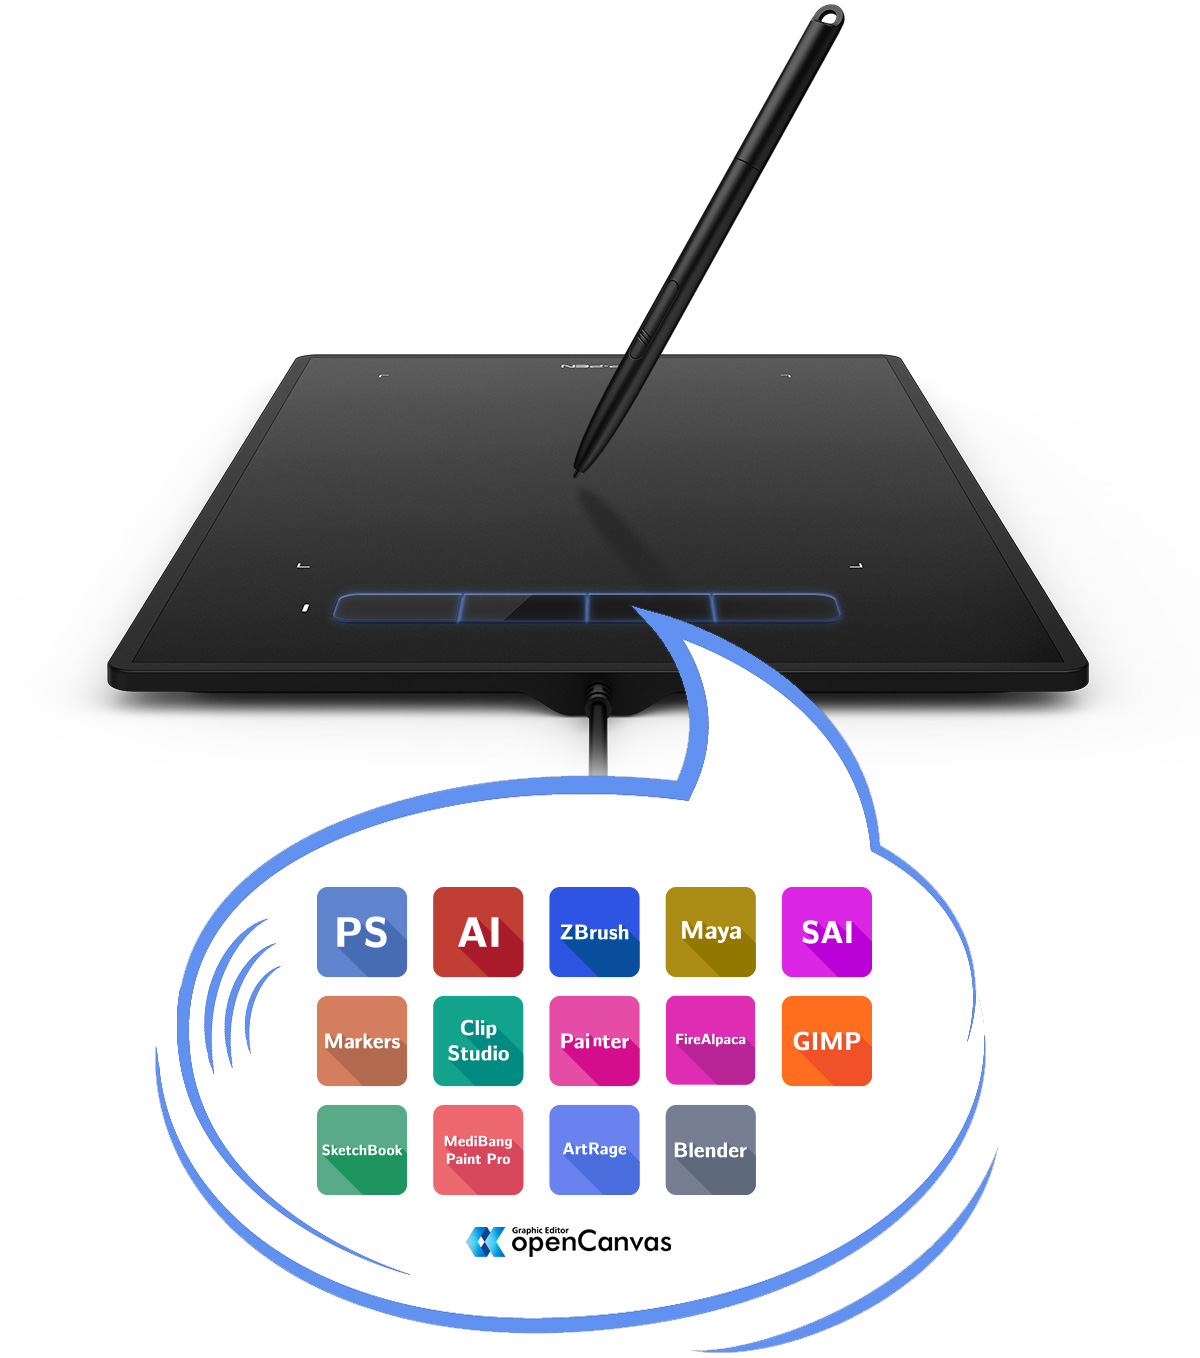 XP-Pen Star G960 best drawing tablet Features four customizable shortcut keys